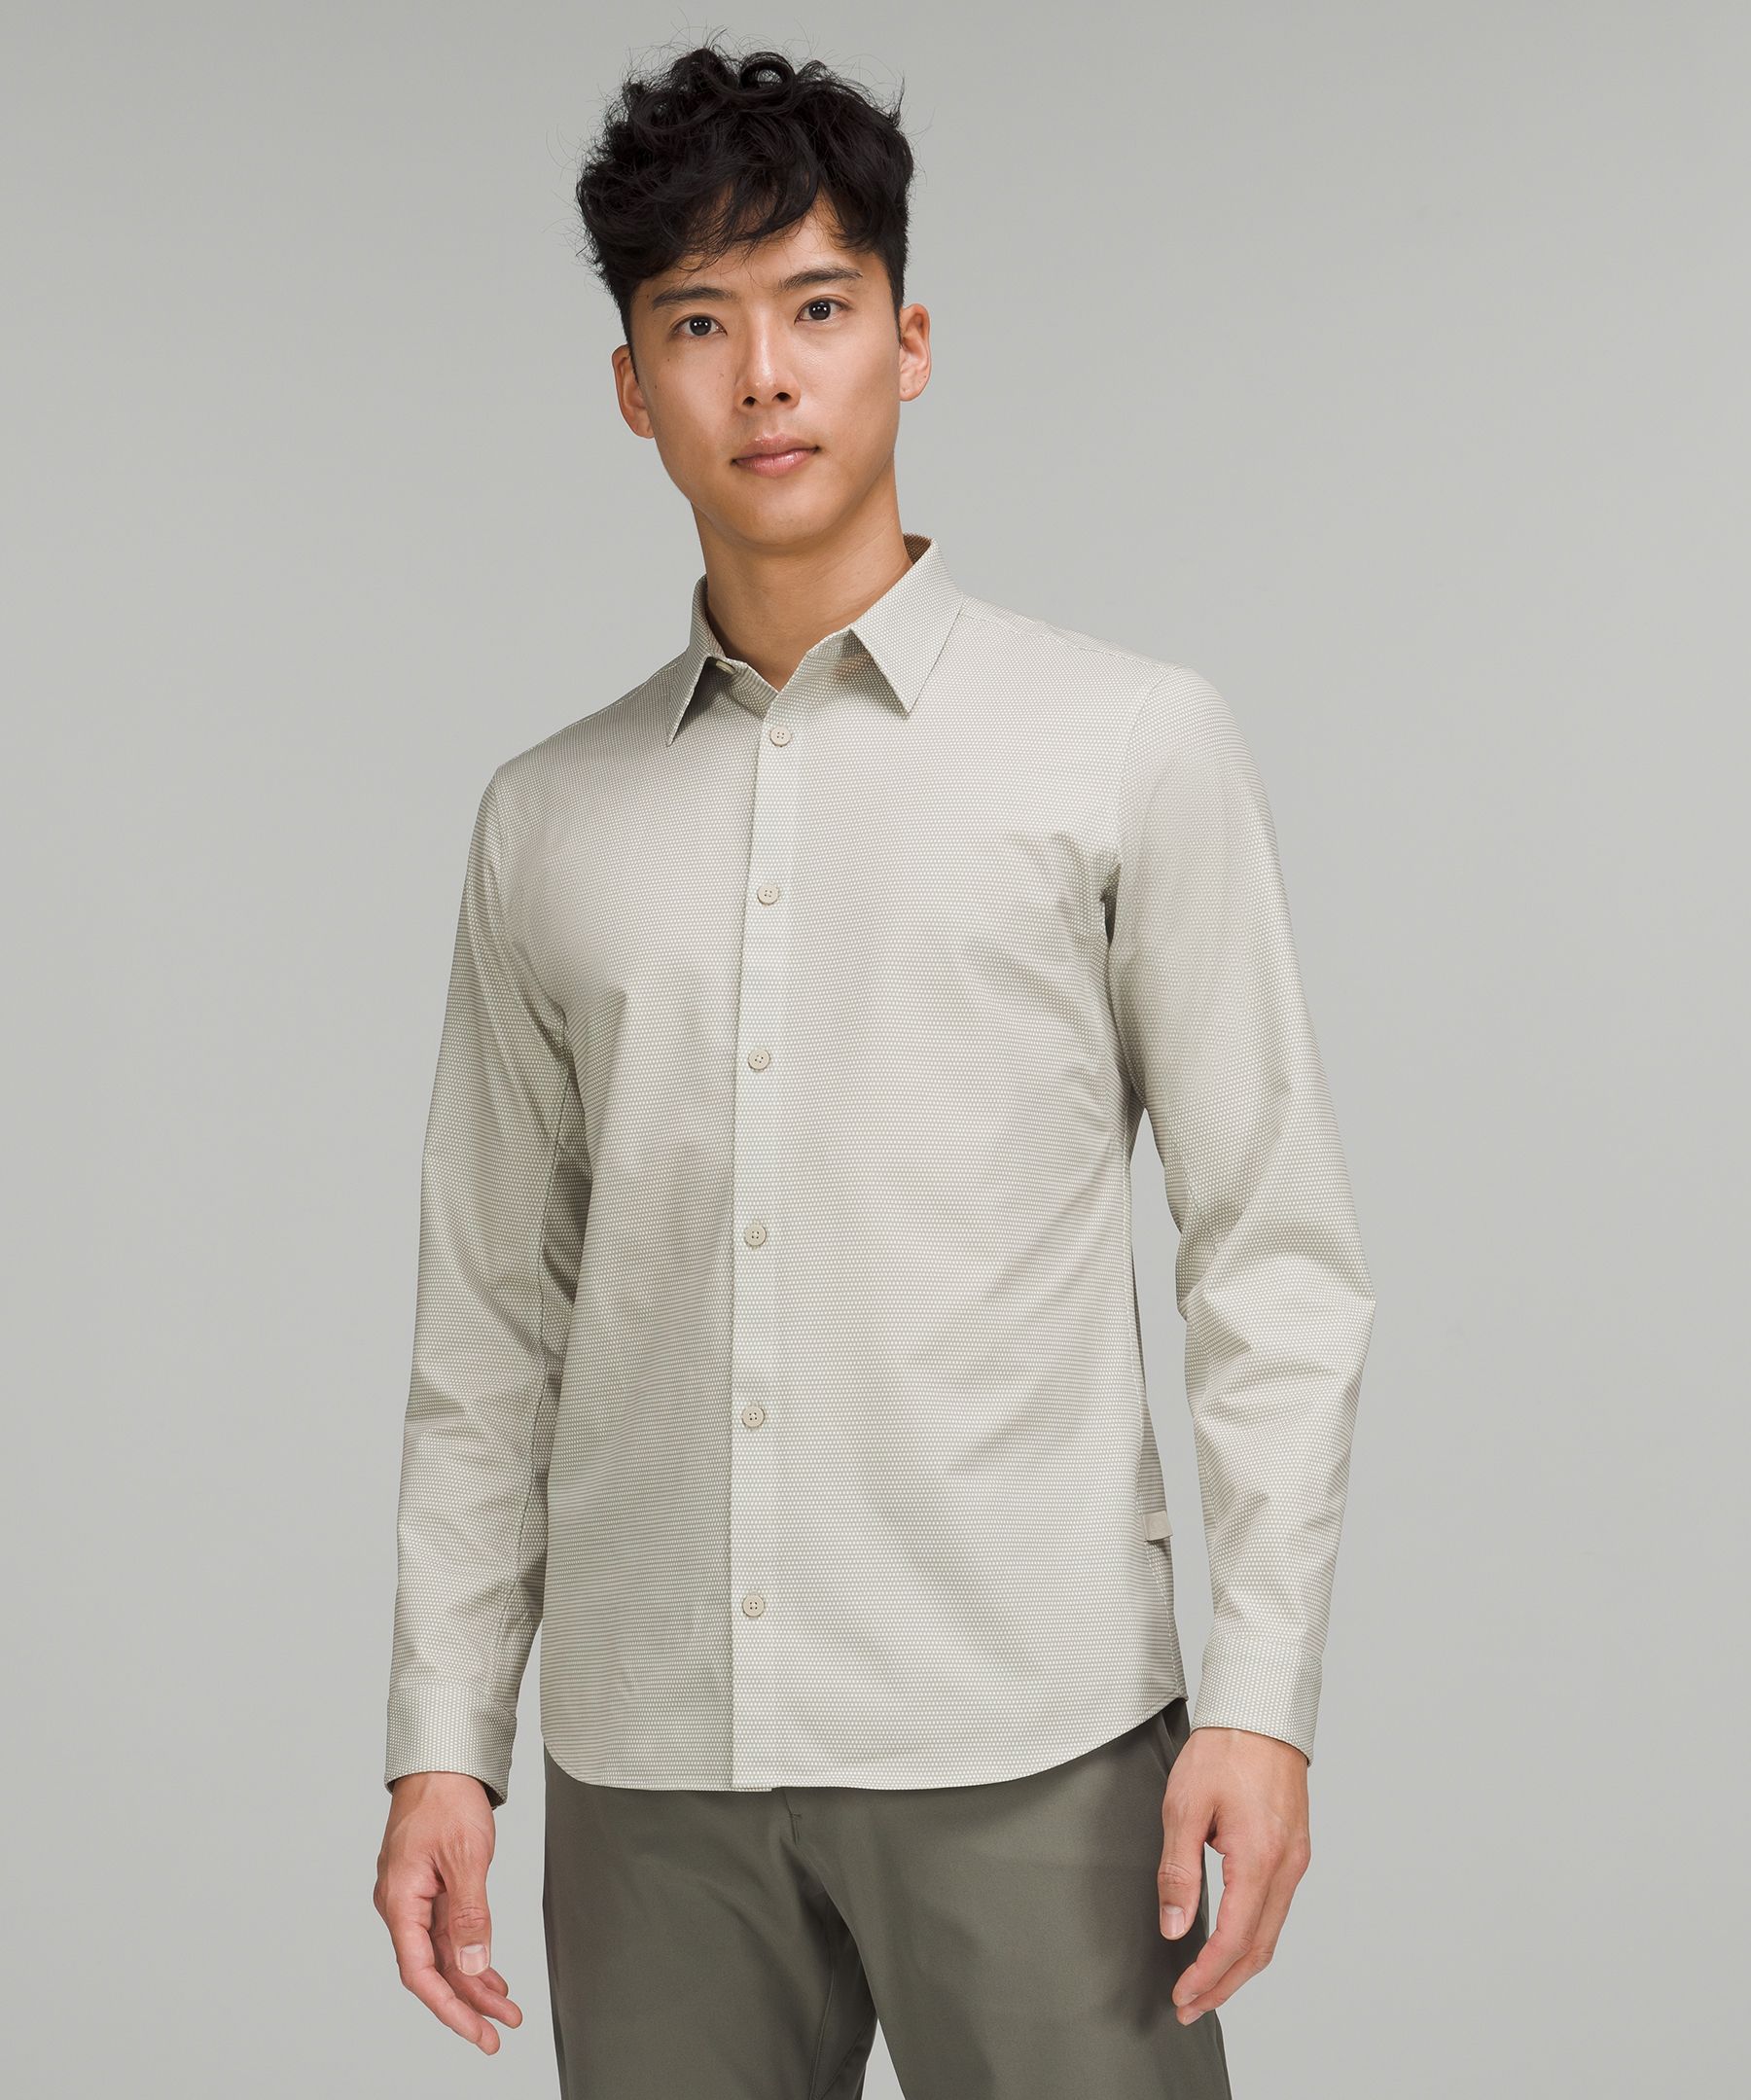 Lululemon New Venture Long Sleeve Shirt In Polka Squat Inverse Antique White Raw Linen